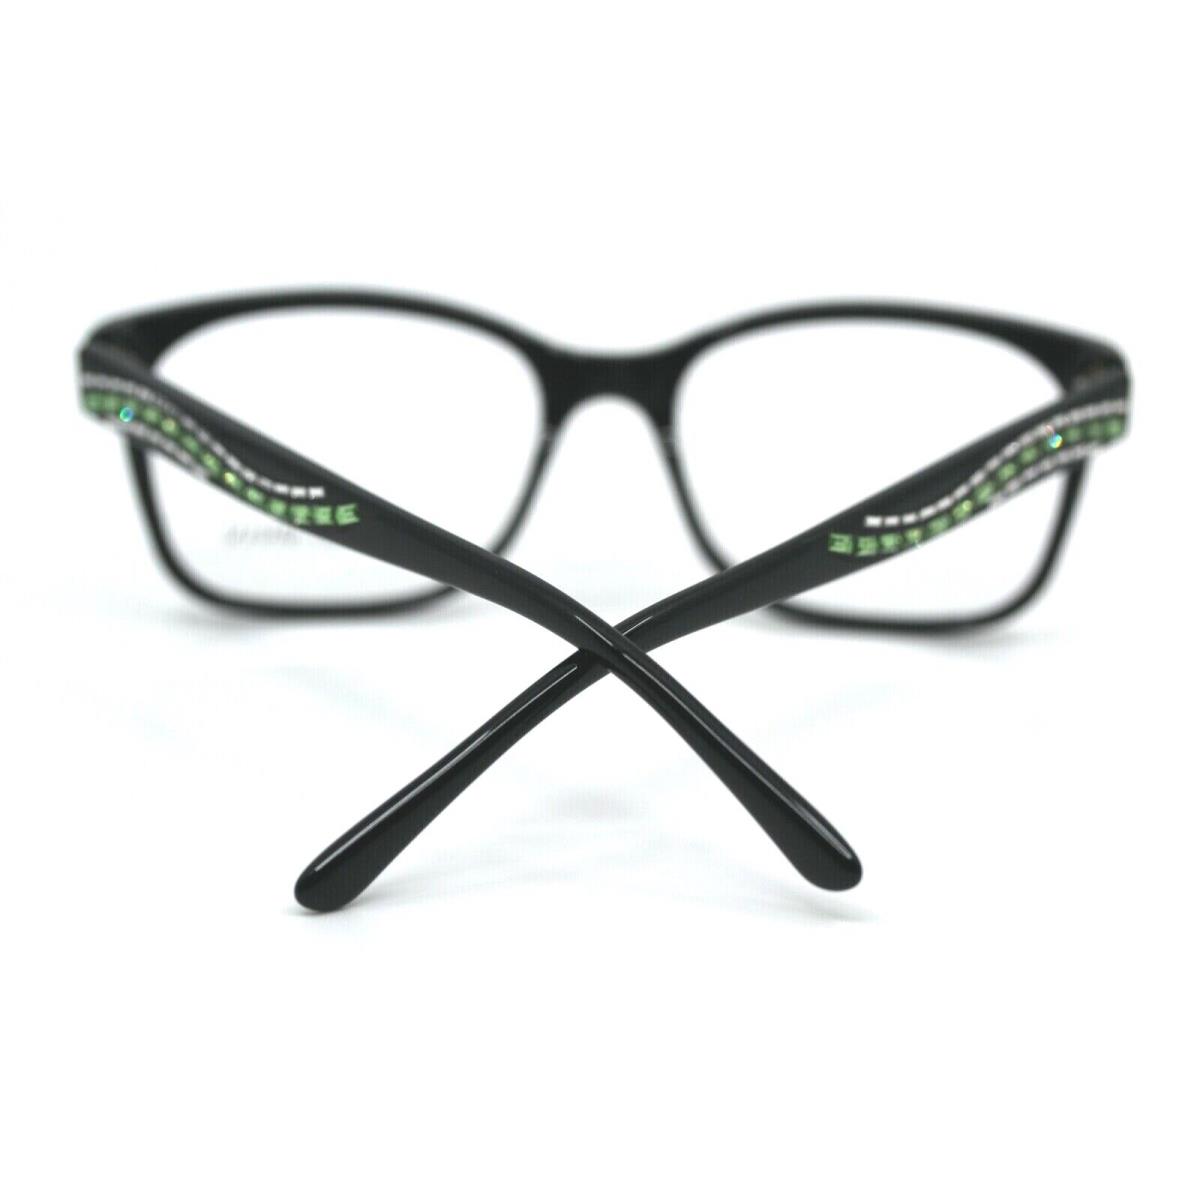 Giorgio Armani eyeglasses  - Black Frame 0